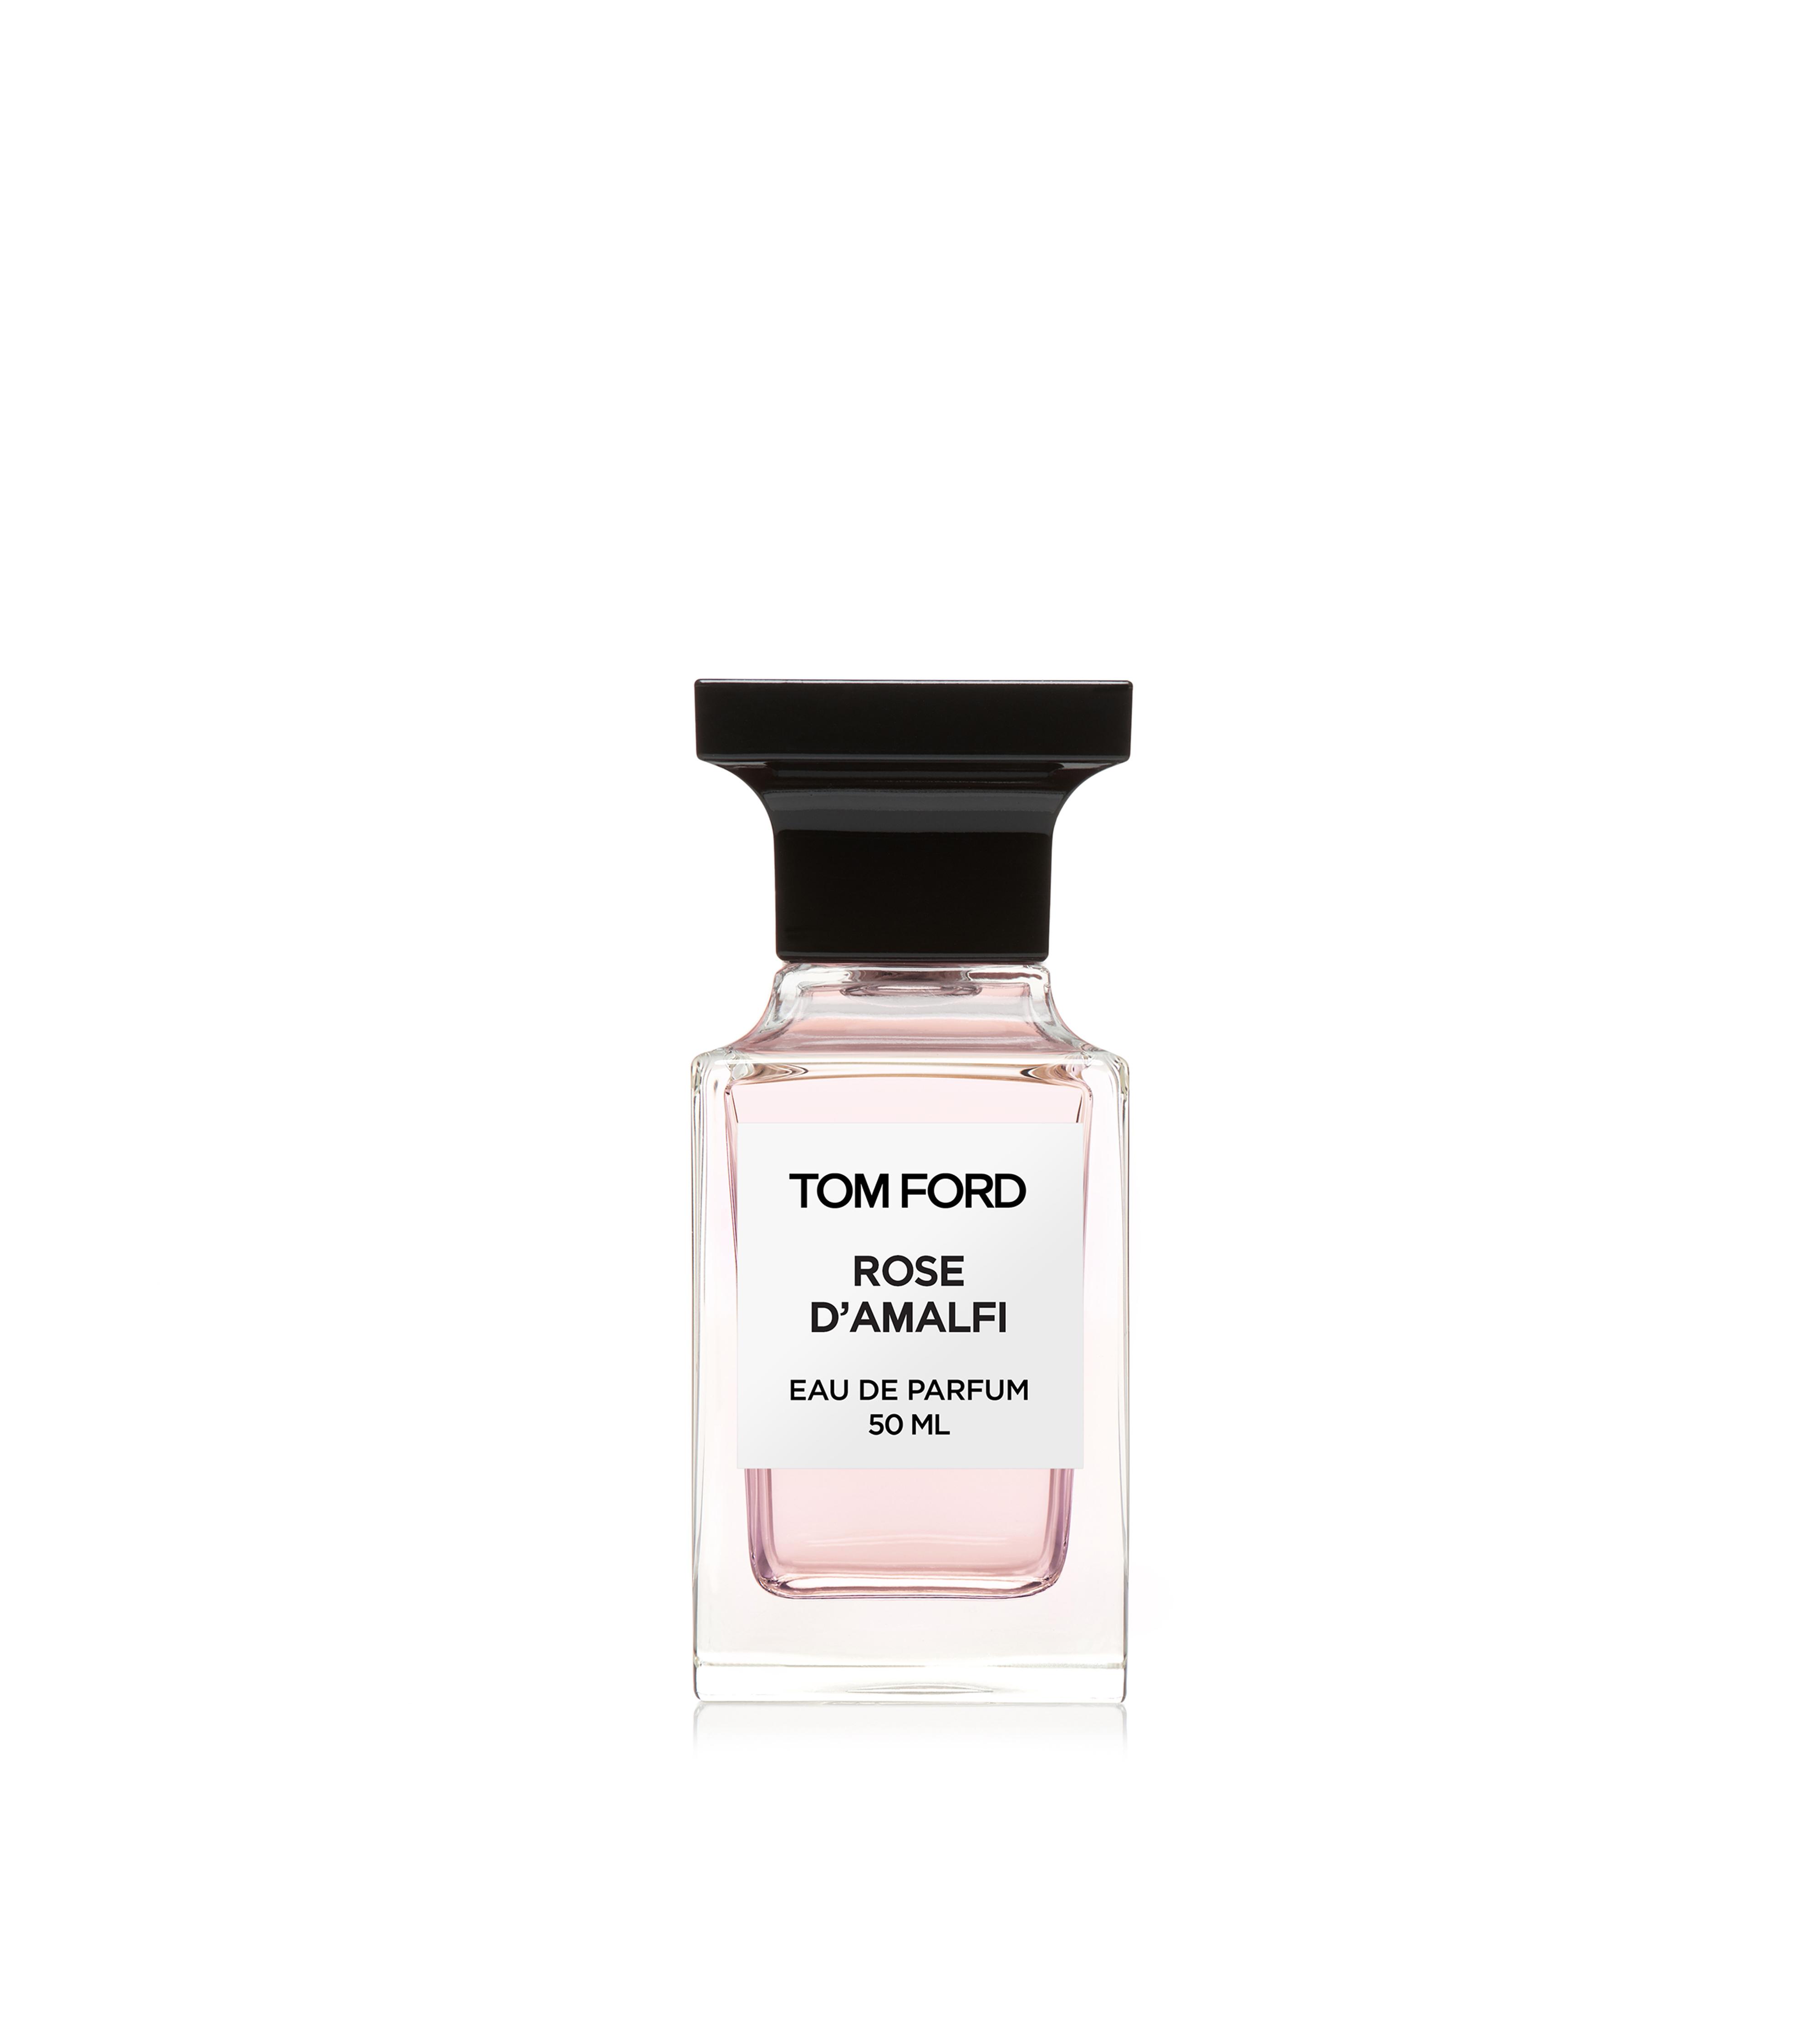 Fragrance - Beauty | TomFord.com